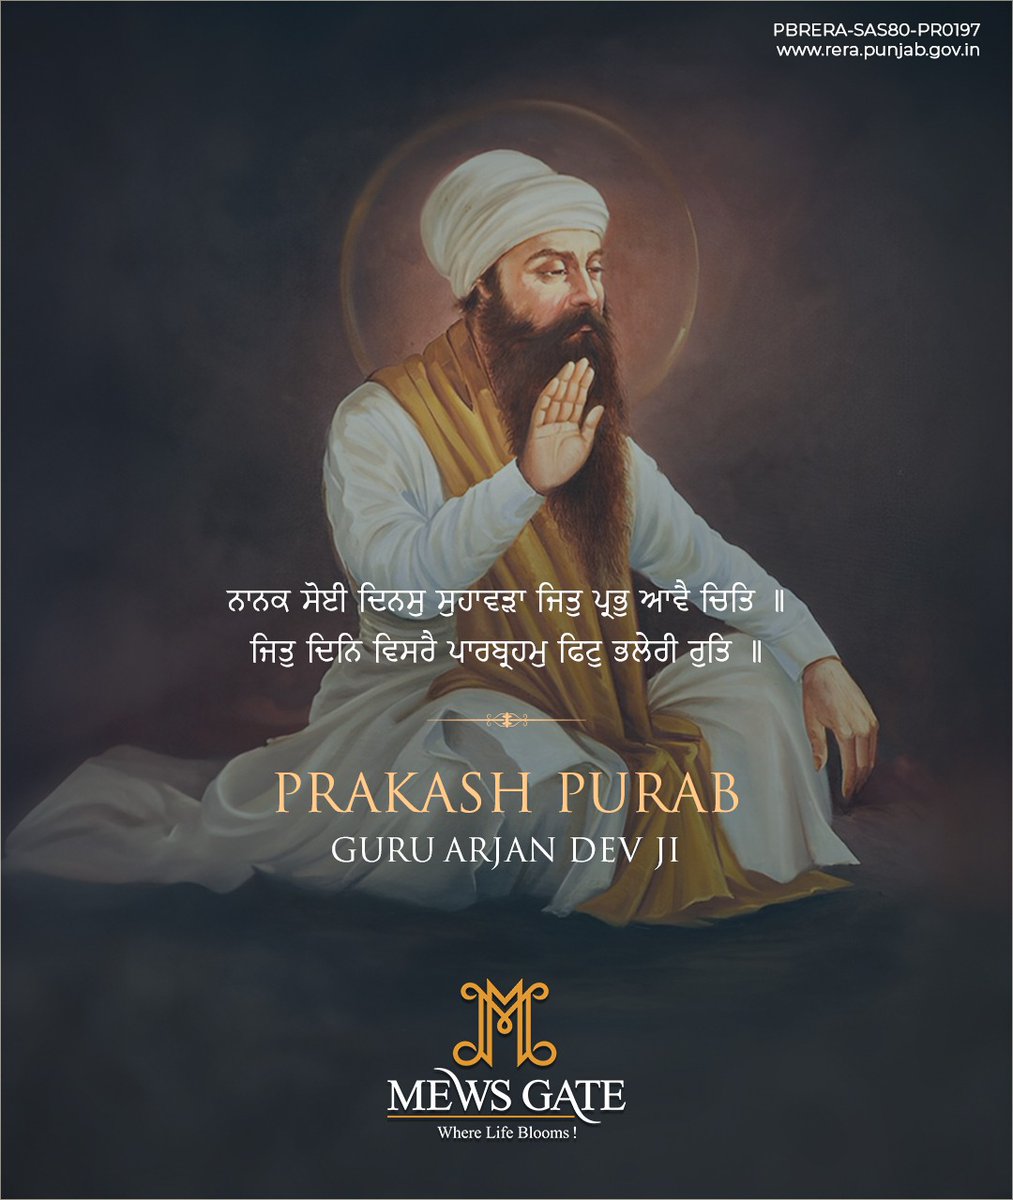 May the teachings of Guru Arjan Dev Ji inspire you to bring peace and happiness to the world. Prakash Purab Shri Guru Arjan Dev Ji ! #MewsGate #PrakashPurab #GuruArjanDevJi #Sikhism #SikhGuru #GuruArjanDevTeachings #SikhCommunity #Peace #Happiness #Gurpurab #SpiritualJourney